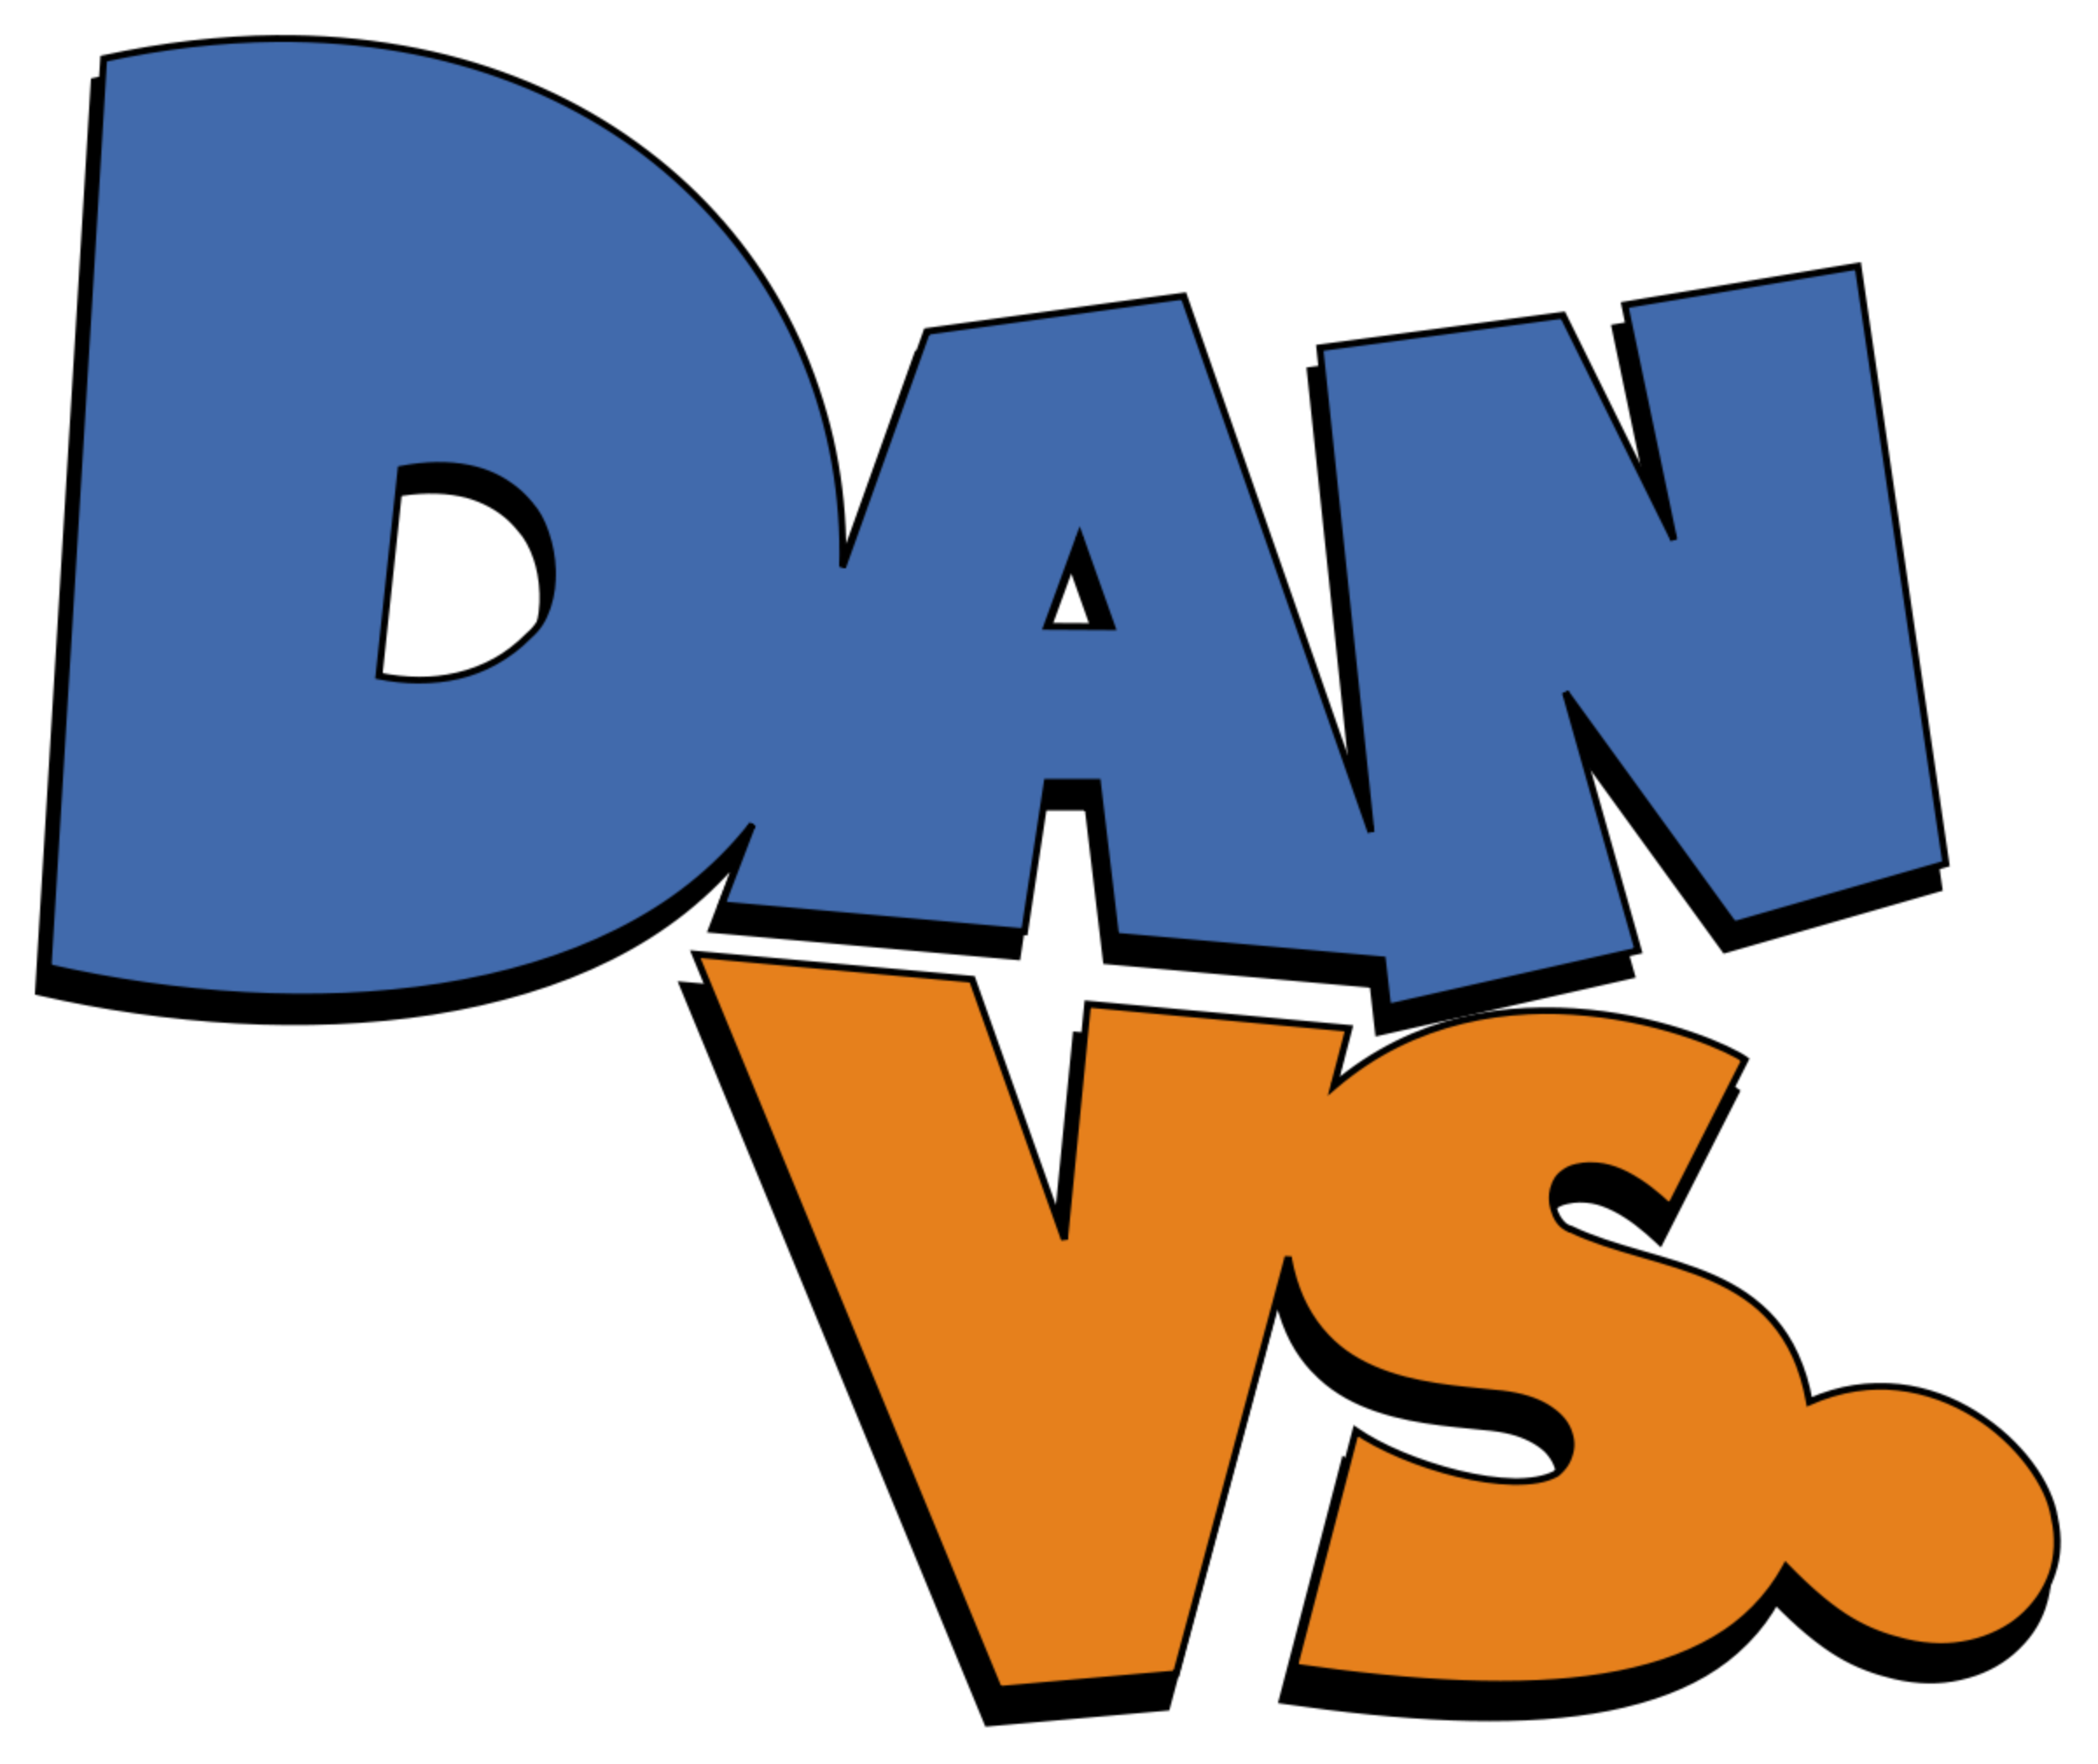 Dan Vs. Complete (6 DVDs Box Set)